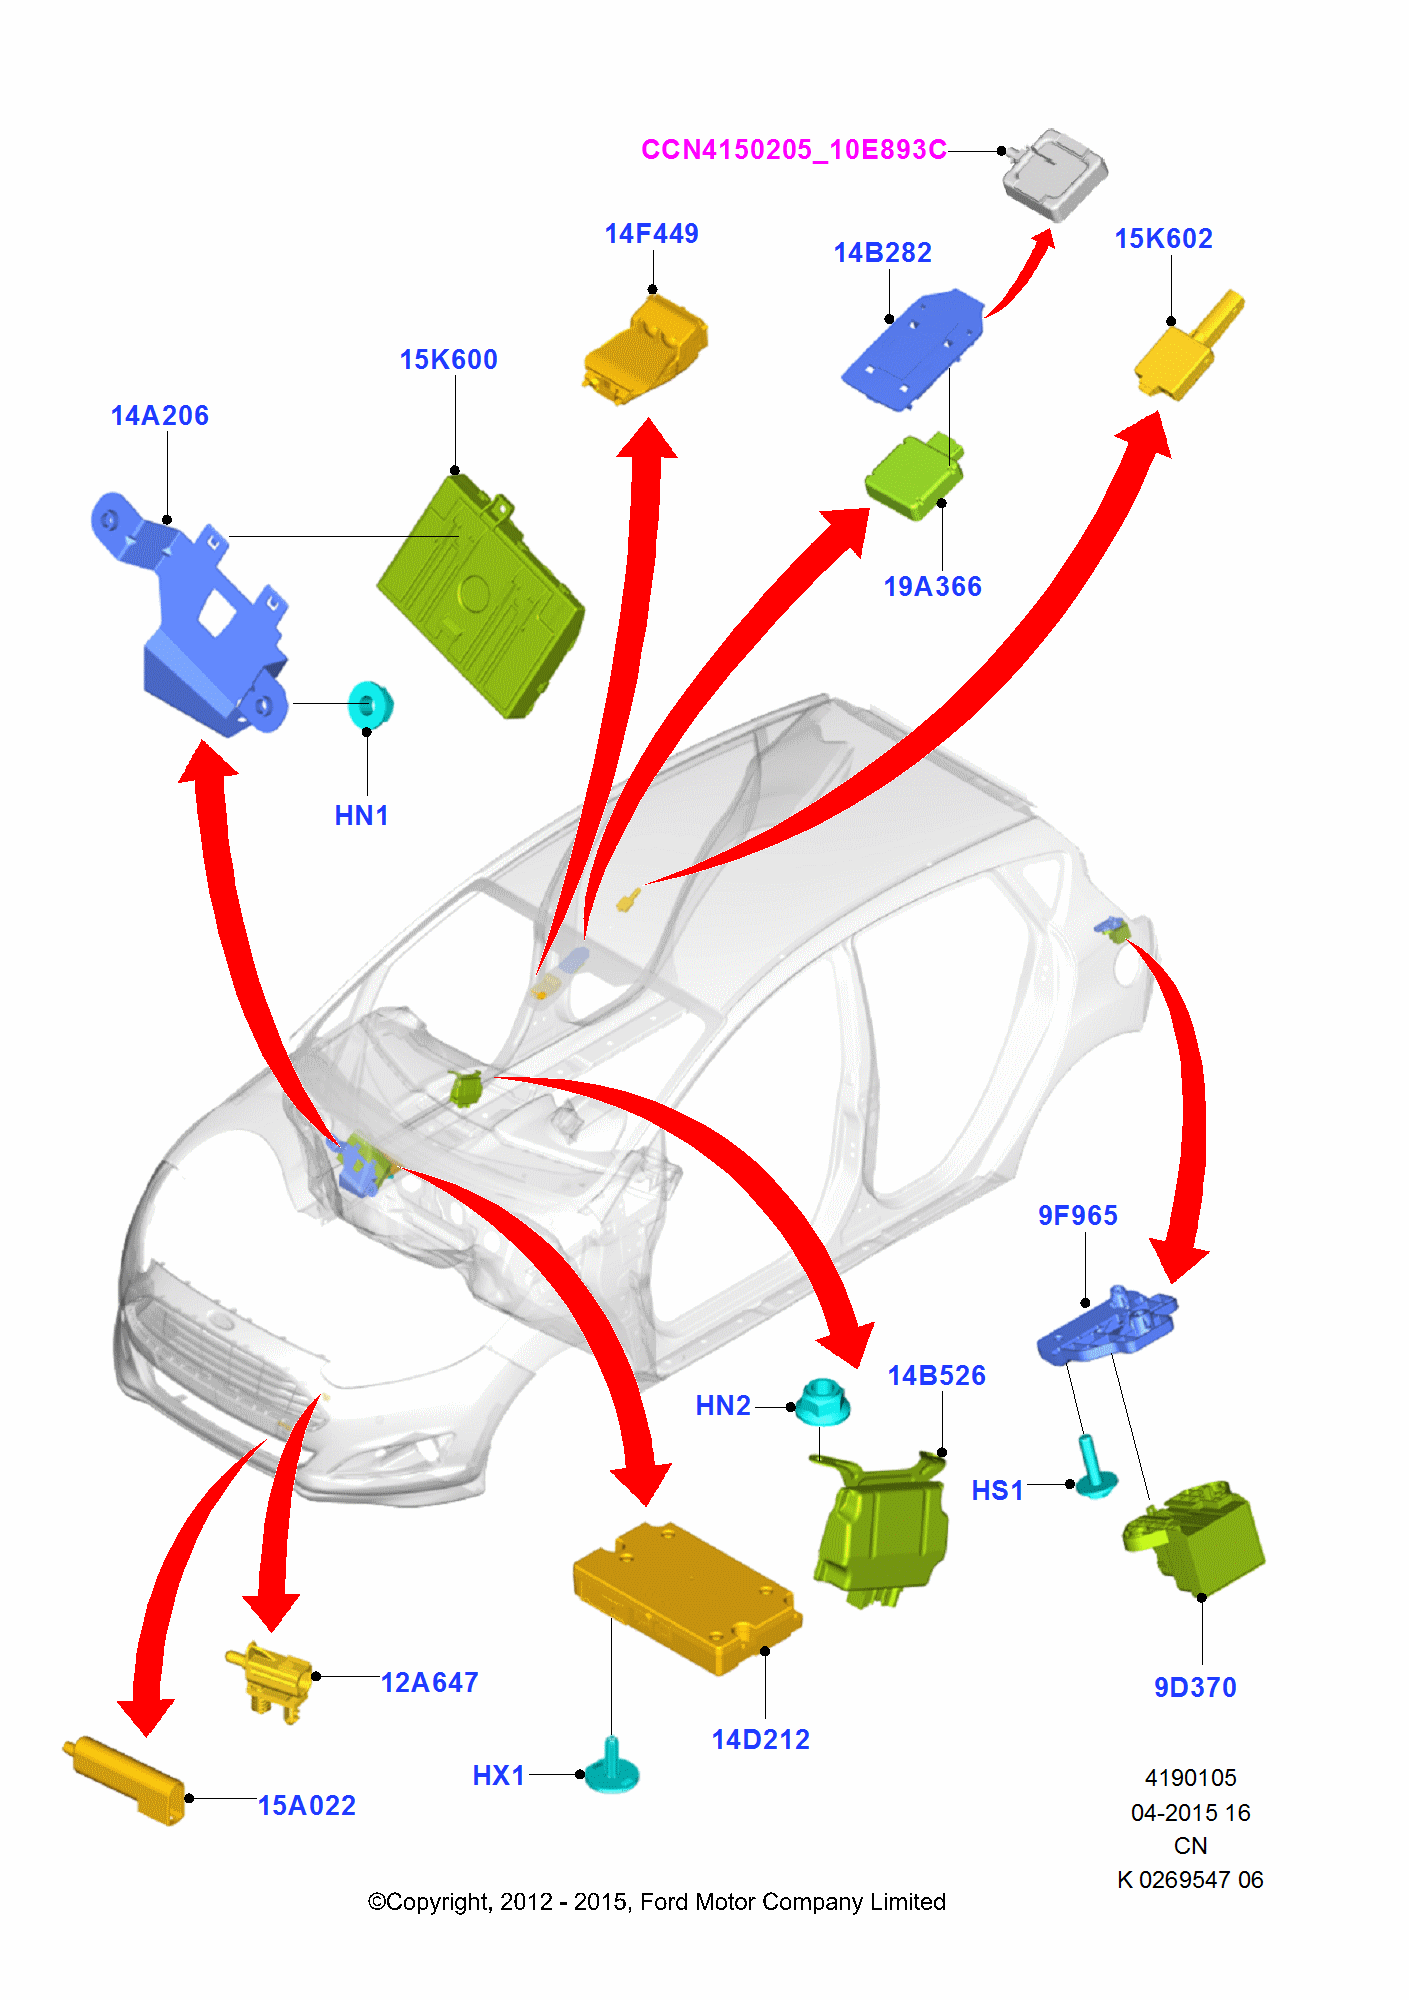 Vehicle Modules And Sensors dla Ford Fiesta Fiesta 2012-                  (CCN)